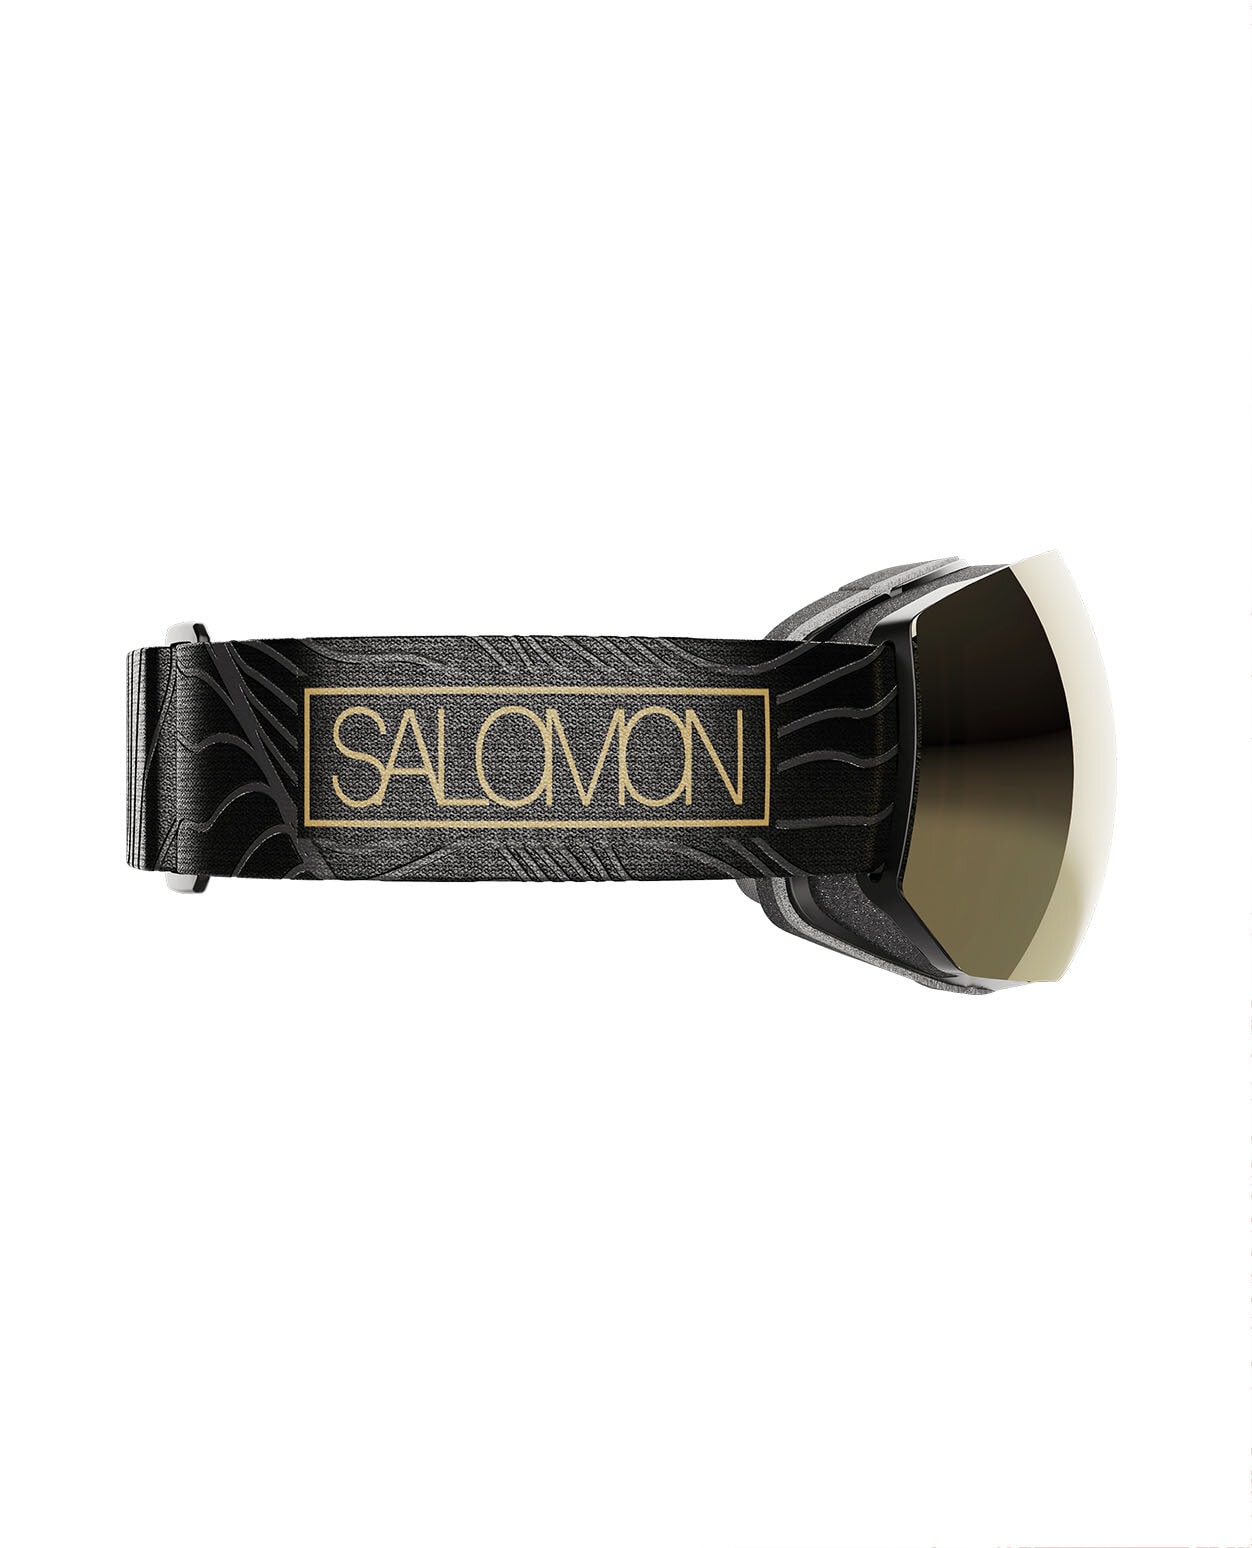 Salomon Radium Pro Sigma Black/Black Gold